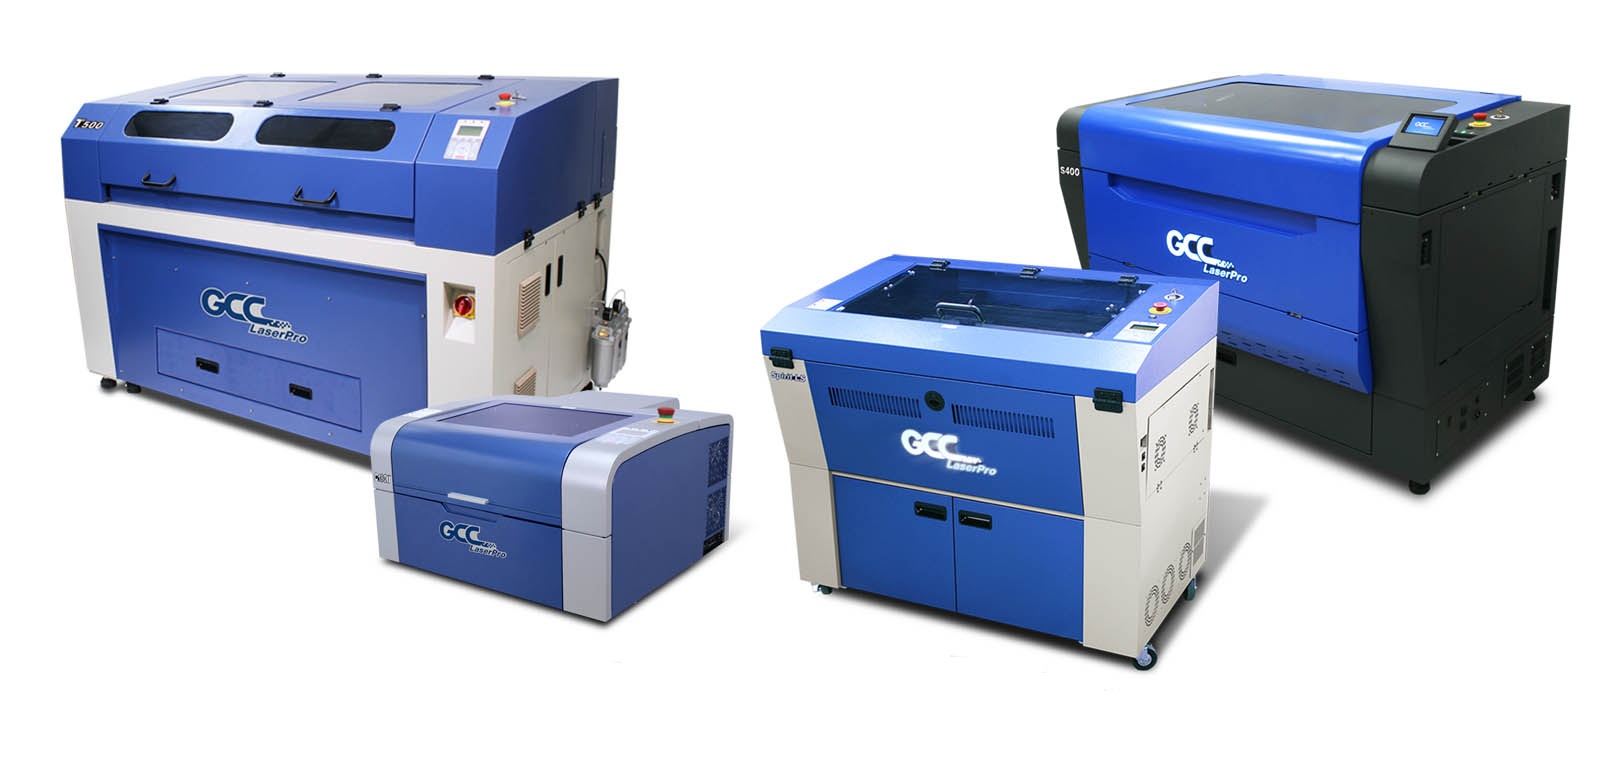 GCC all Laser engraving machines